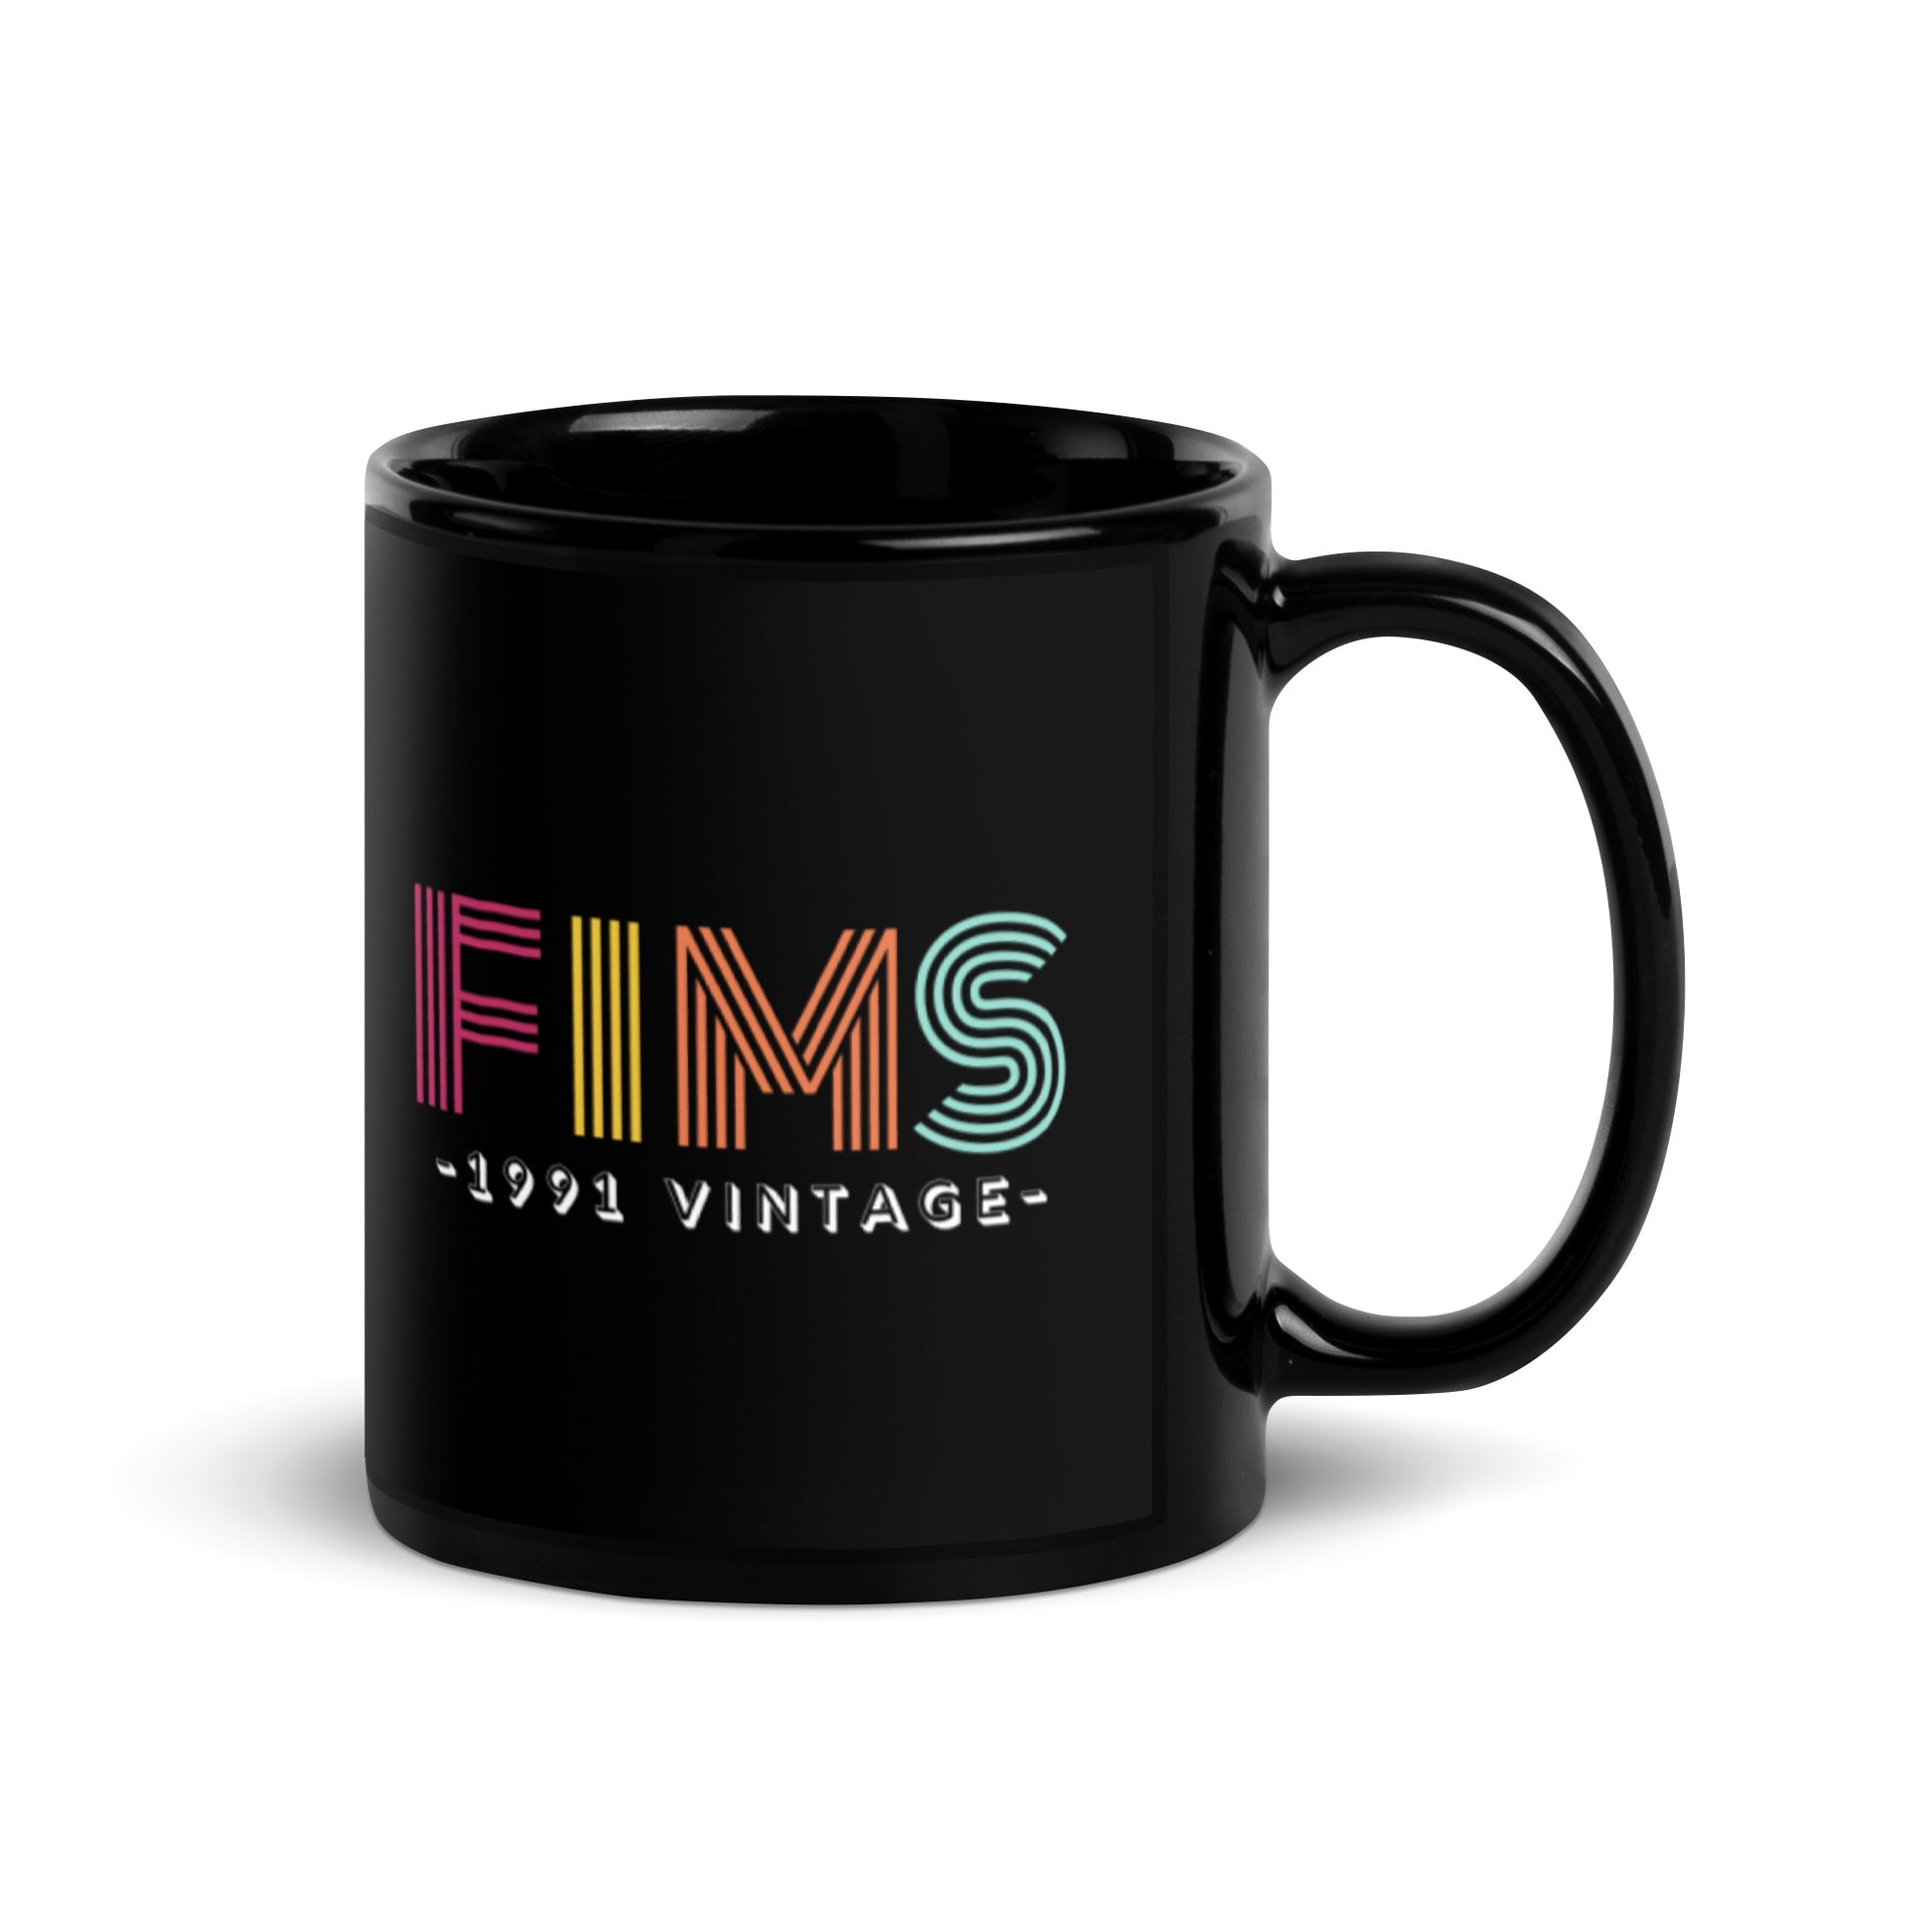 FIMS 1991 Vintage Black Glossy Mug 11oz-recalciGrant